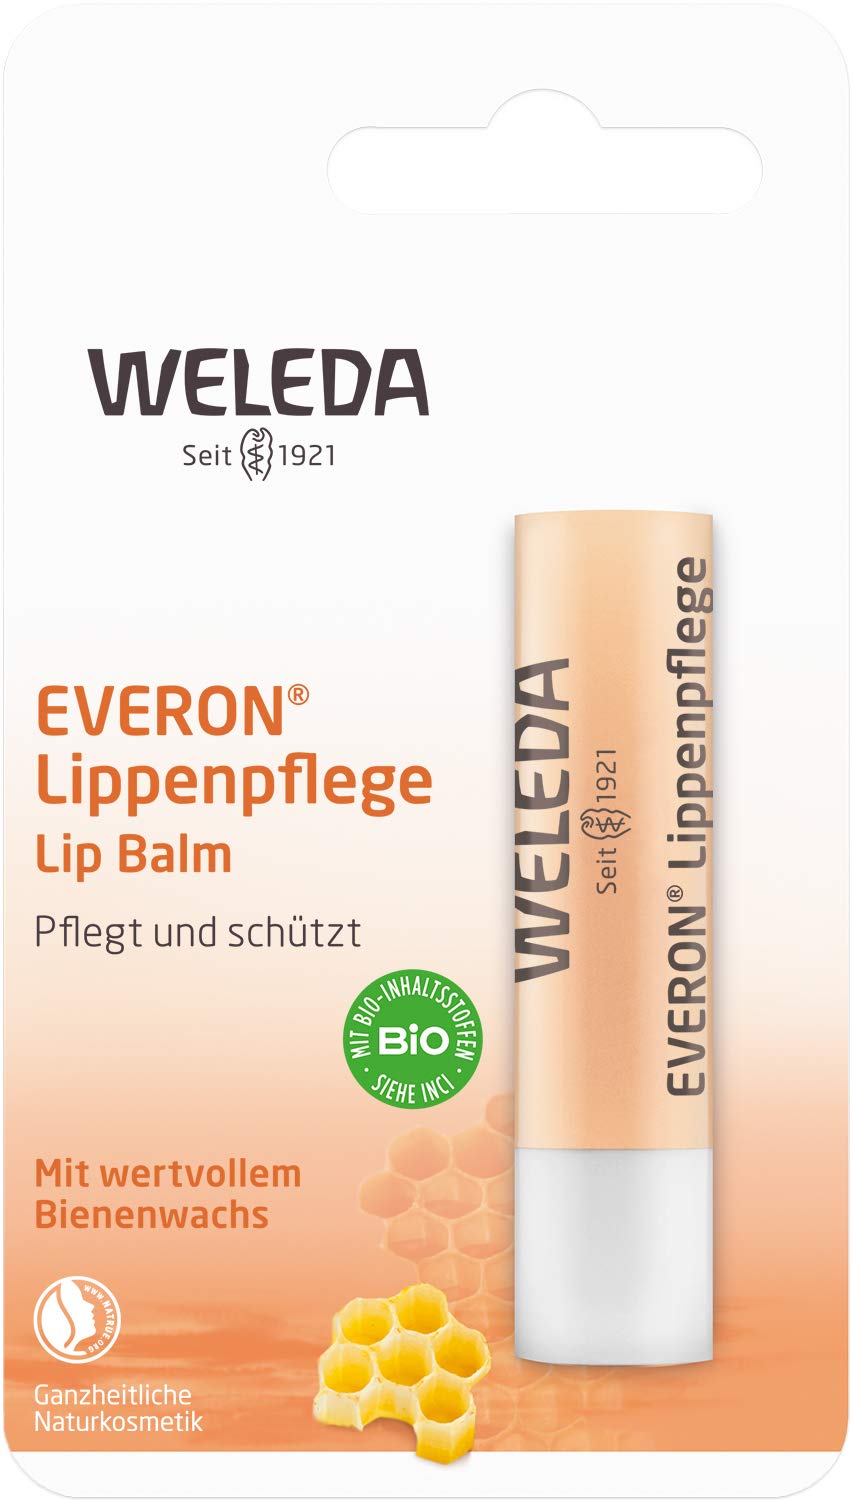 Weleda Bio Everon Lip Balm Blister Pack 1 (1 x 4.80 g)